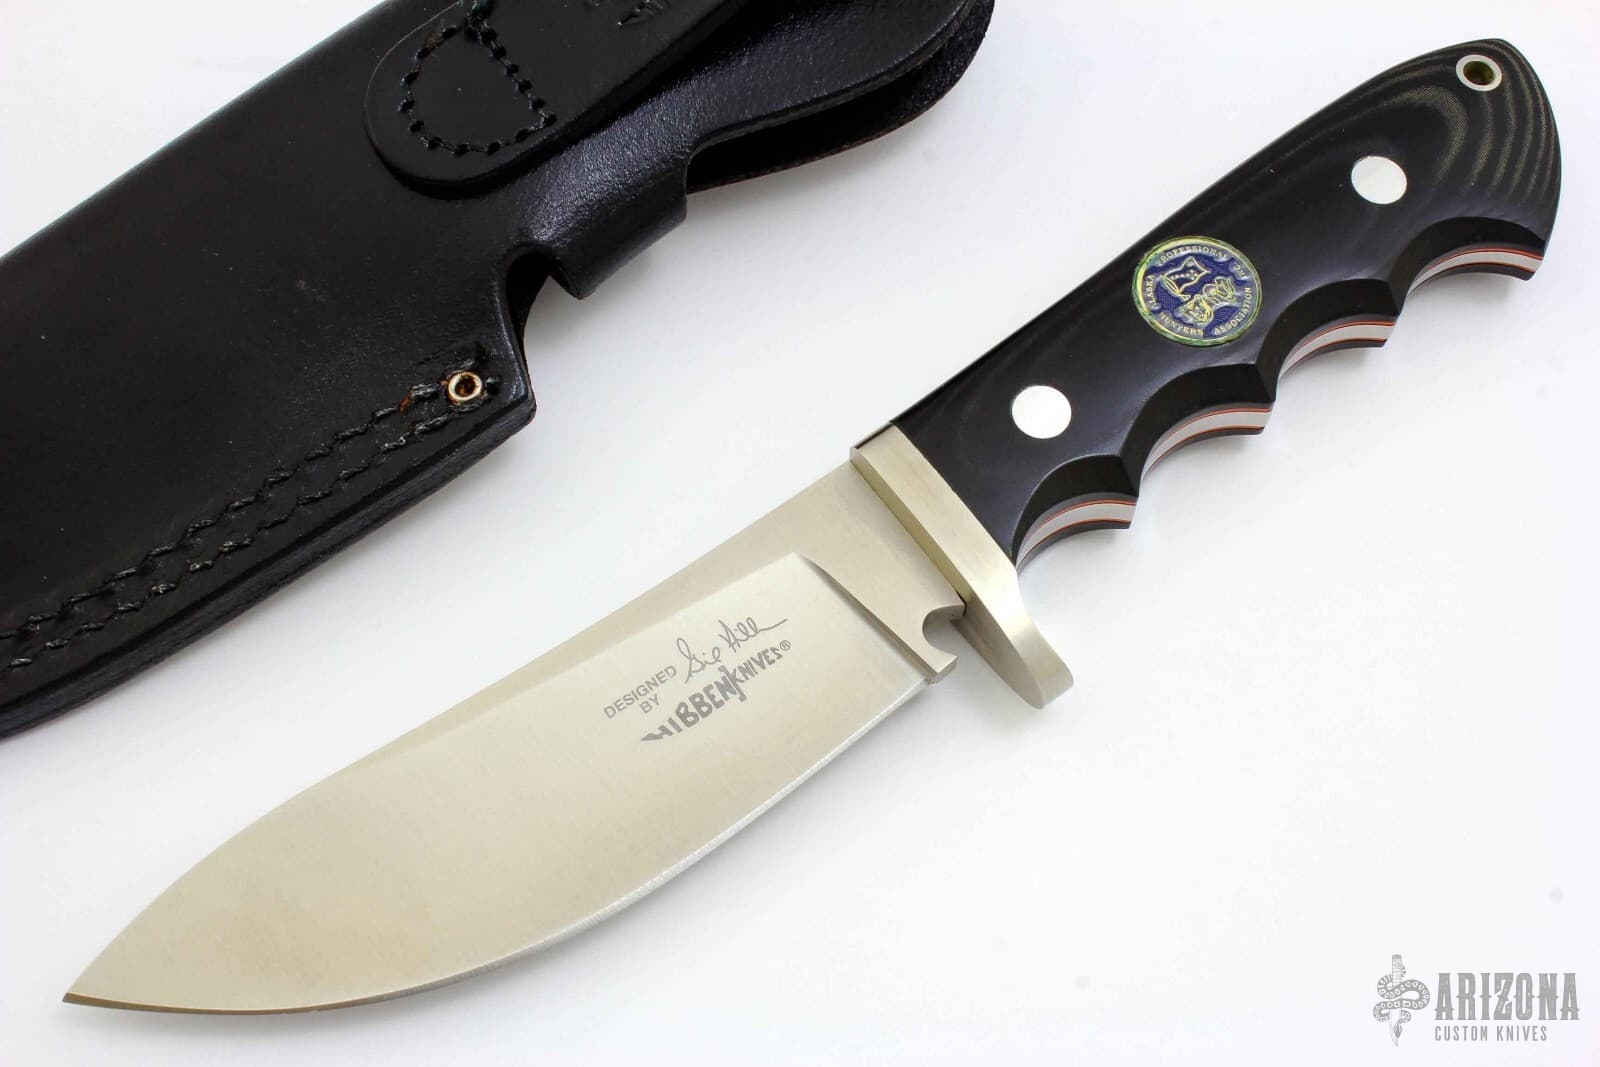 custom knives design